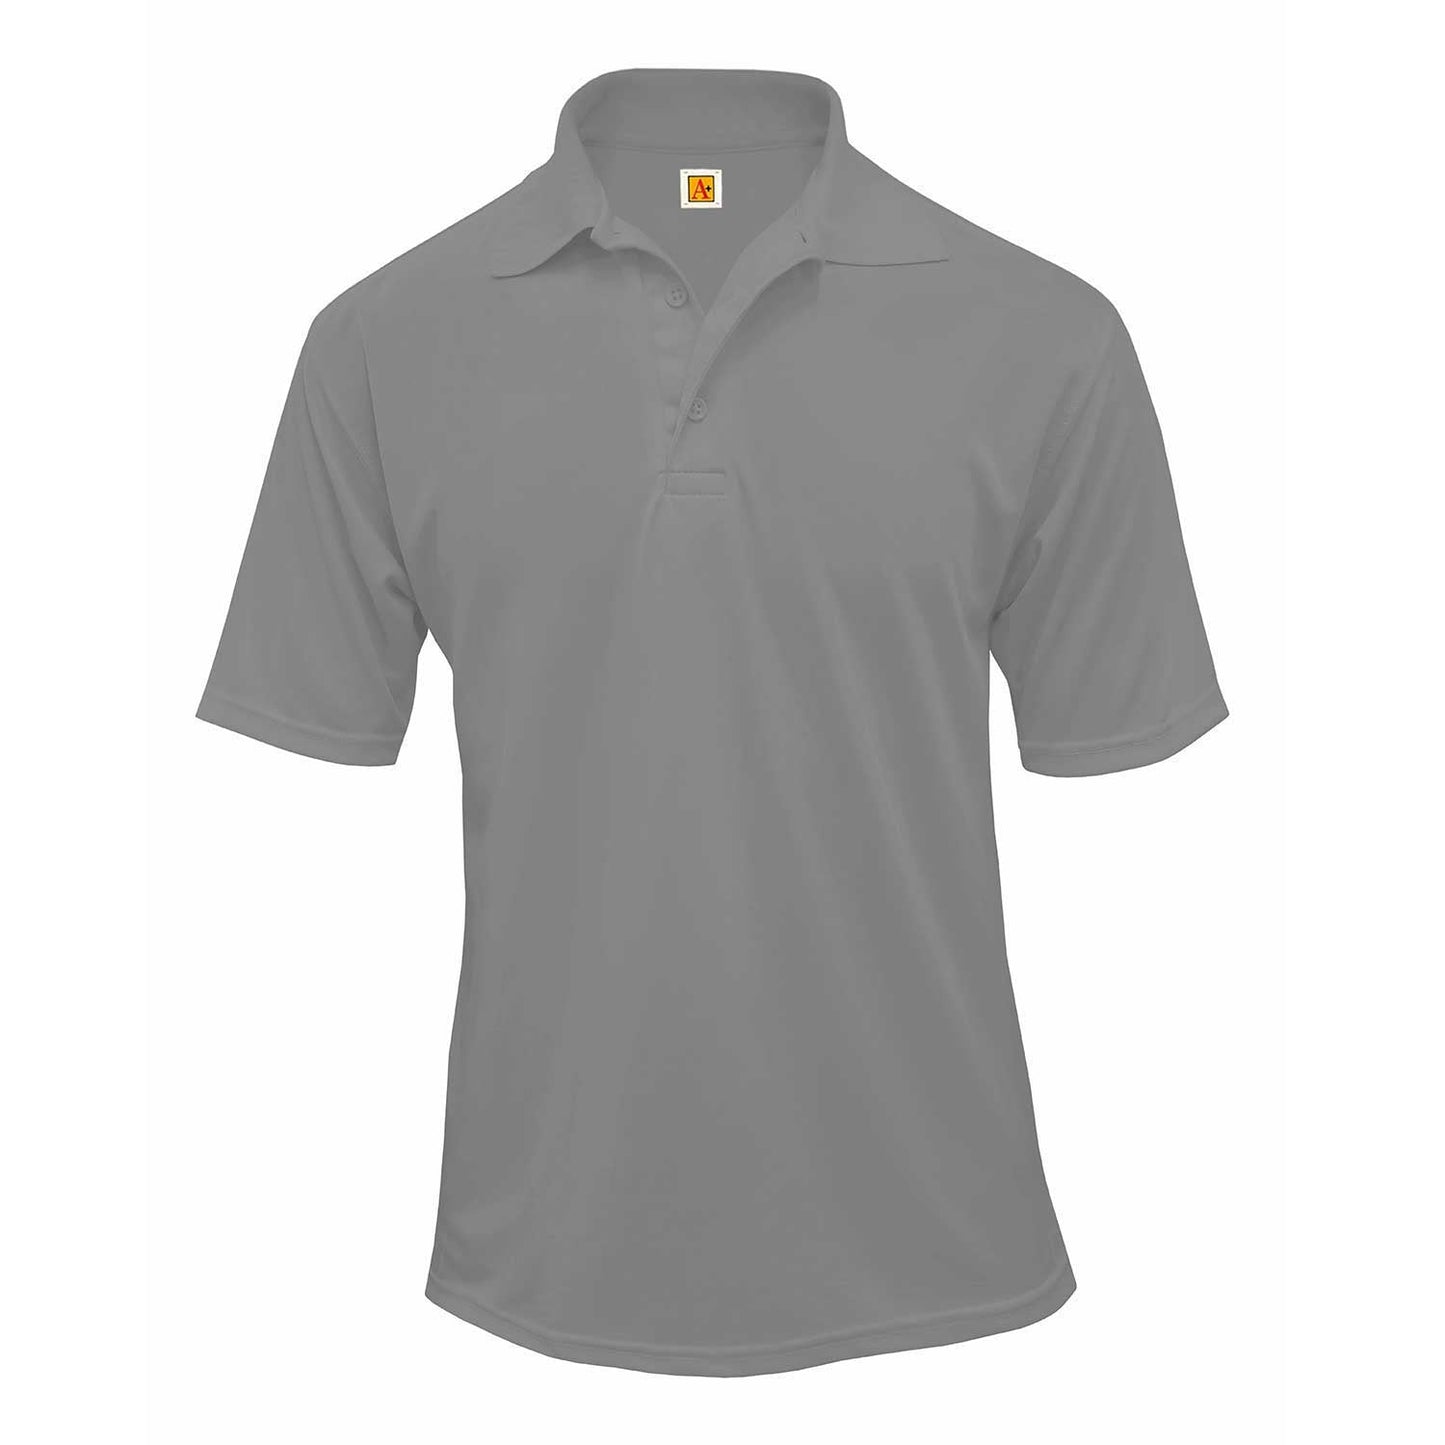 Performance Dri-fit Jersey Knit Short Sleeve Shirt (Unisex) w/Logo - 1100